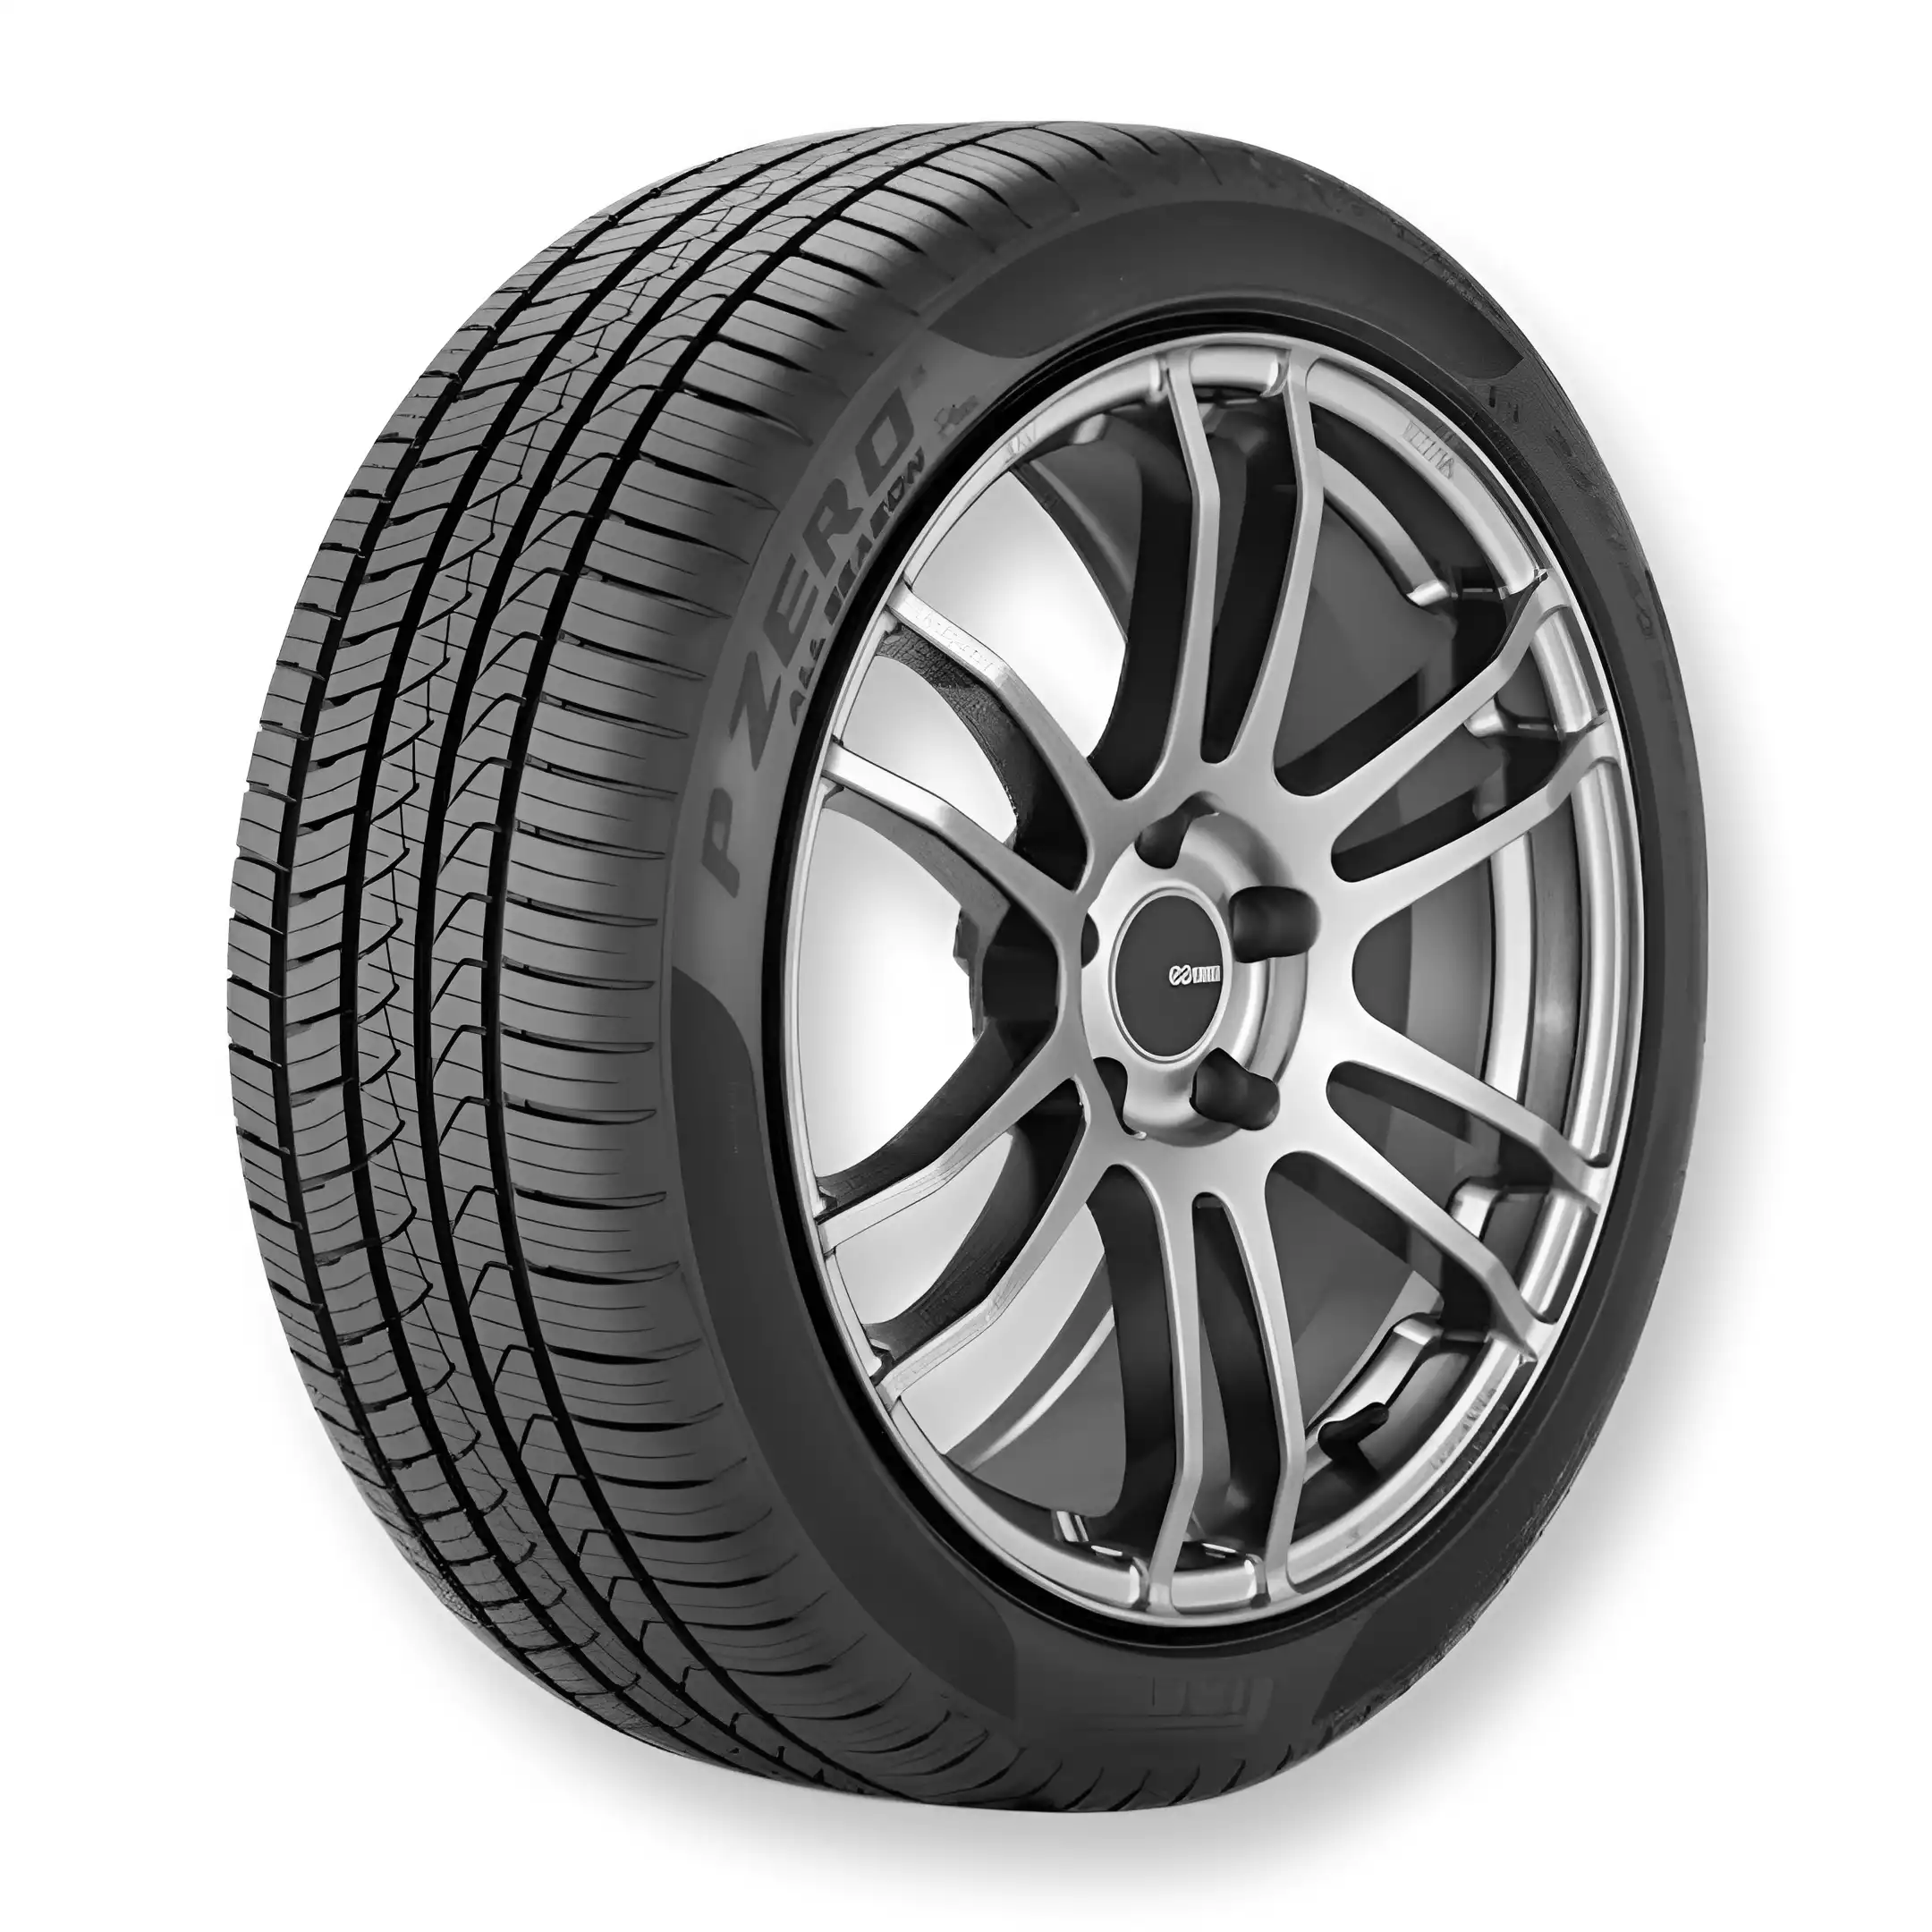 Pirelli p zero tires review